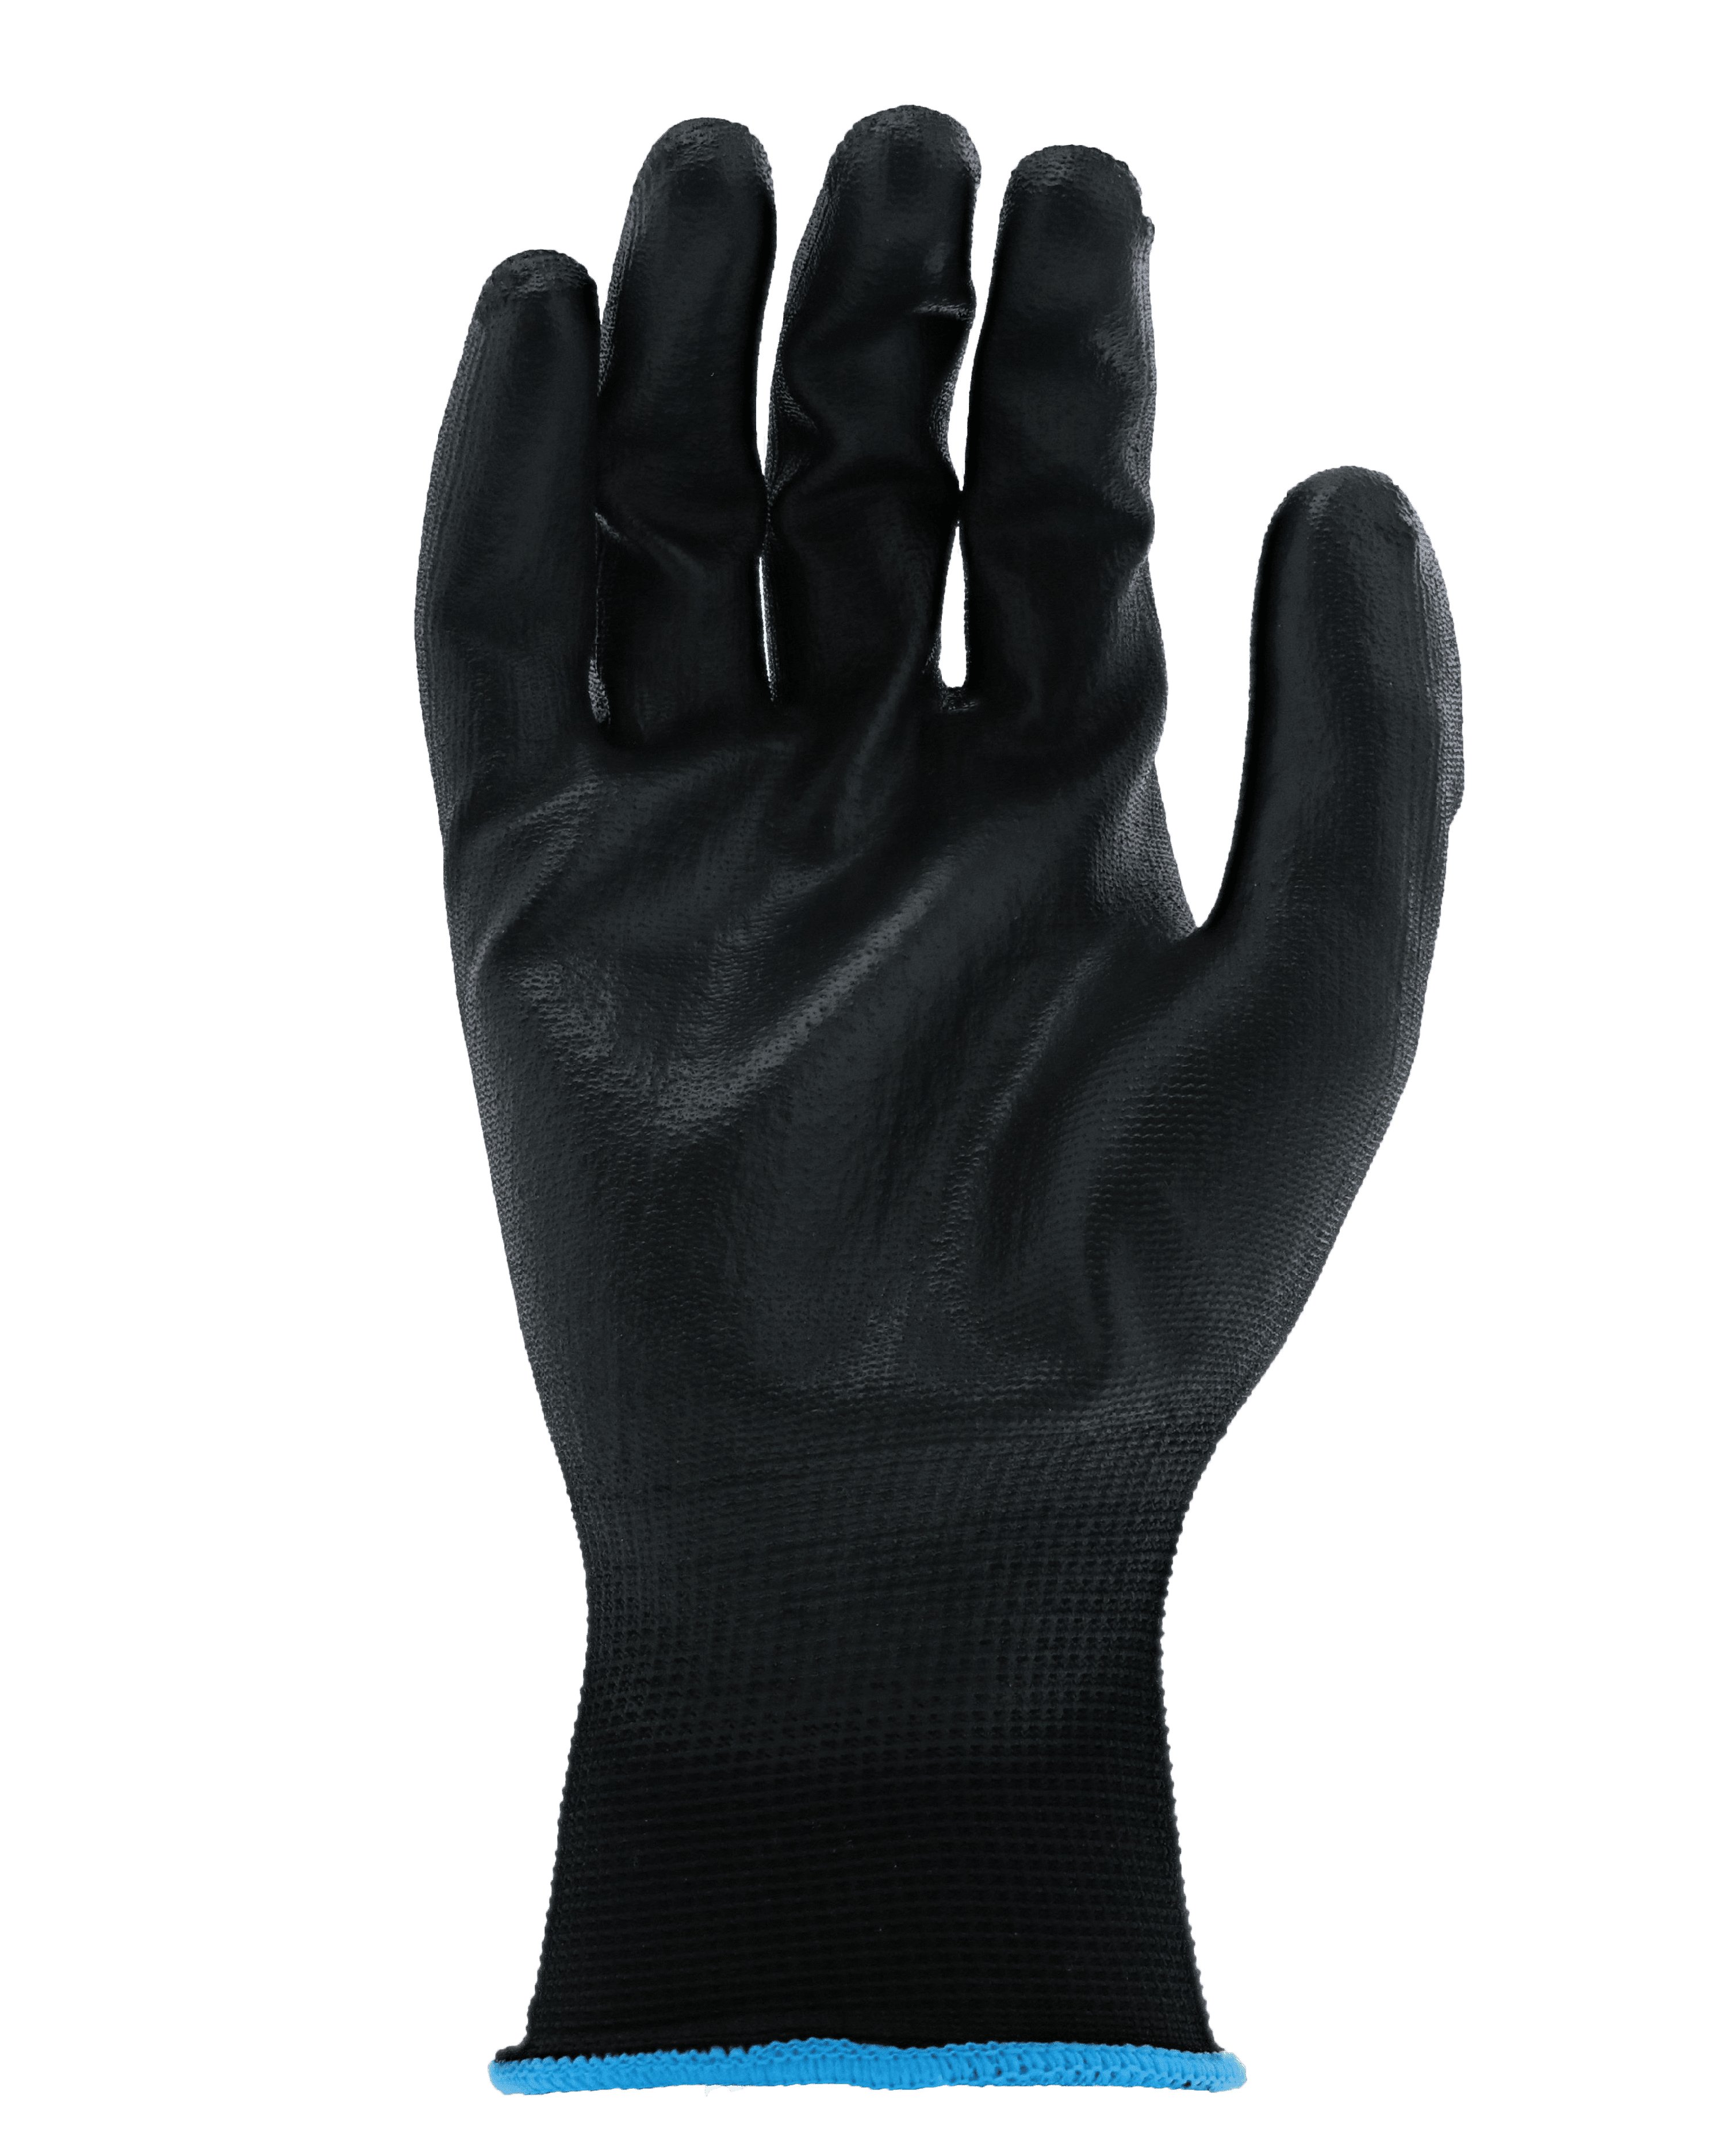 5 Pack Gorilla Grip Gloves - Large - Yahoo Shopping